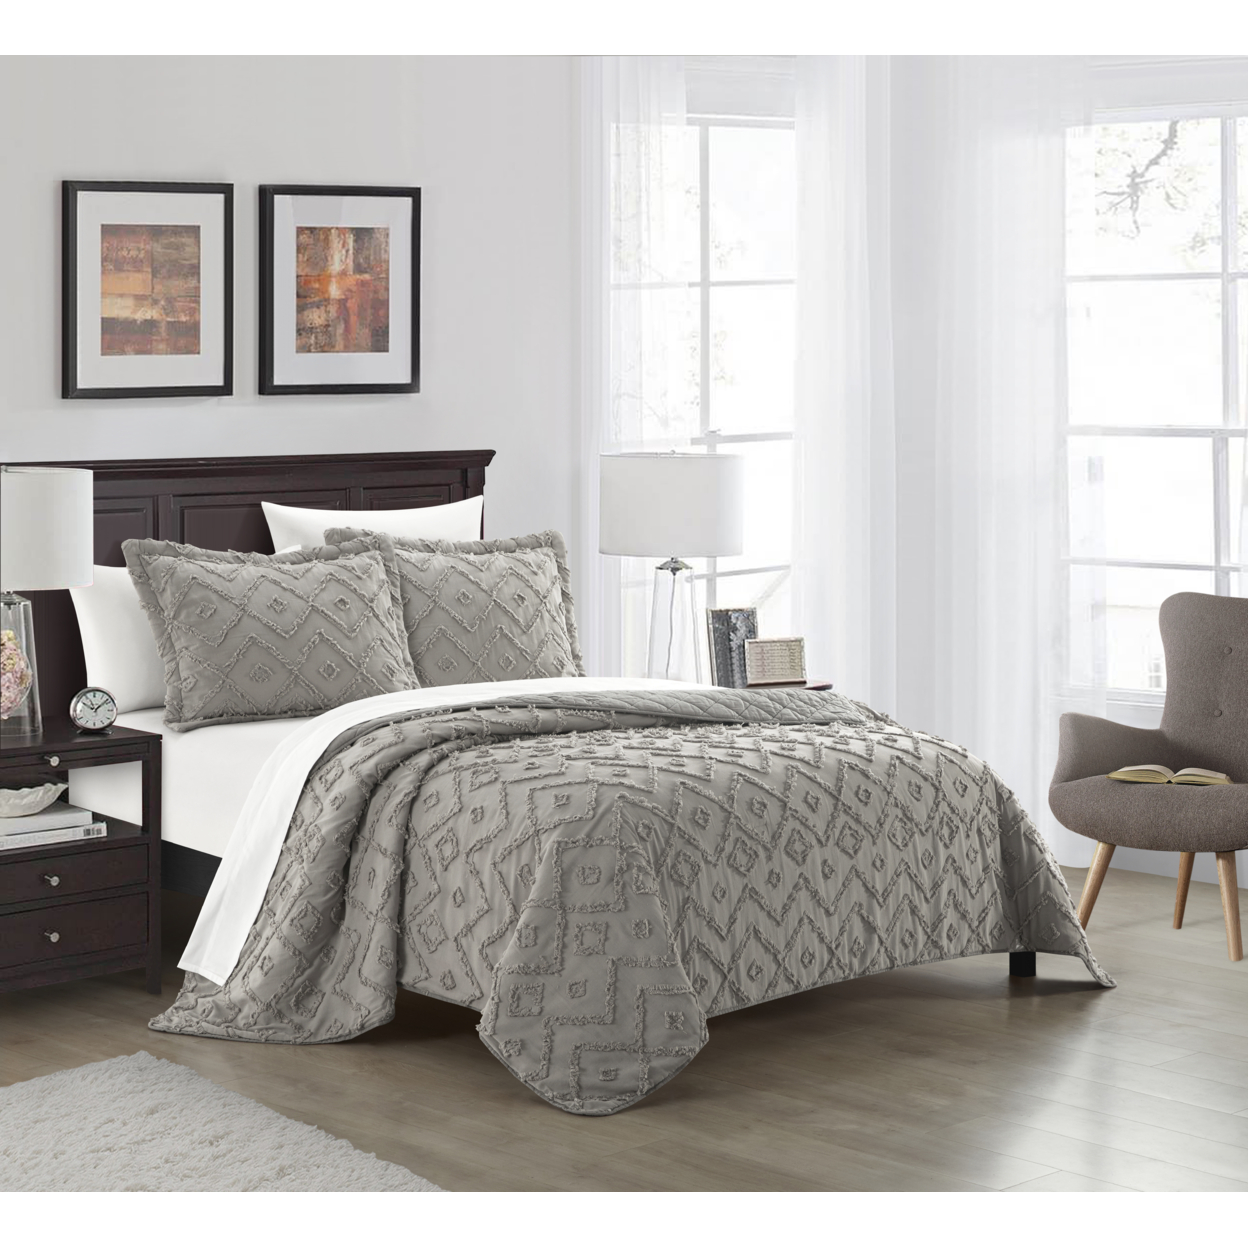 NY&C Home Dody 3 Piece Cotton Quilt Set Clip Jacquard Geometric Pattern Bedding - Beige, Queen